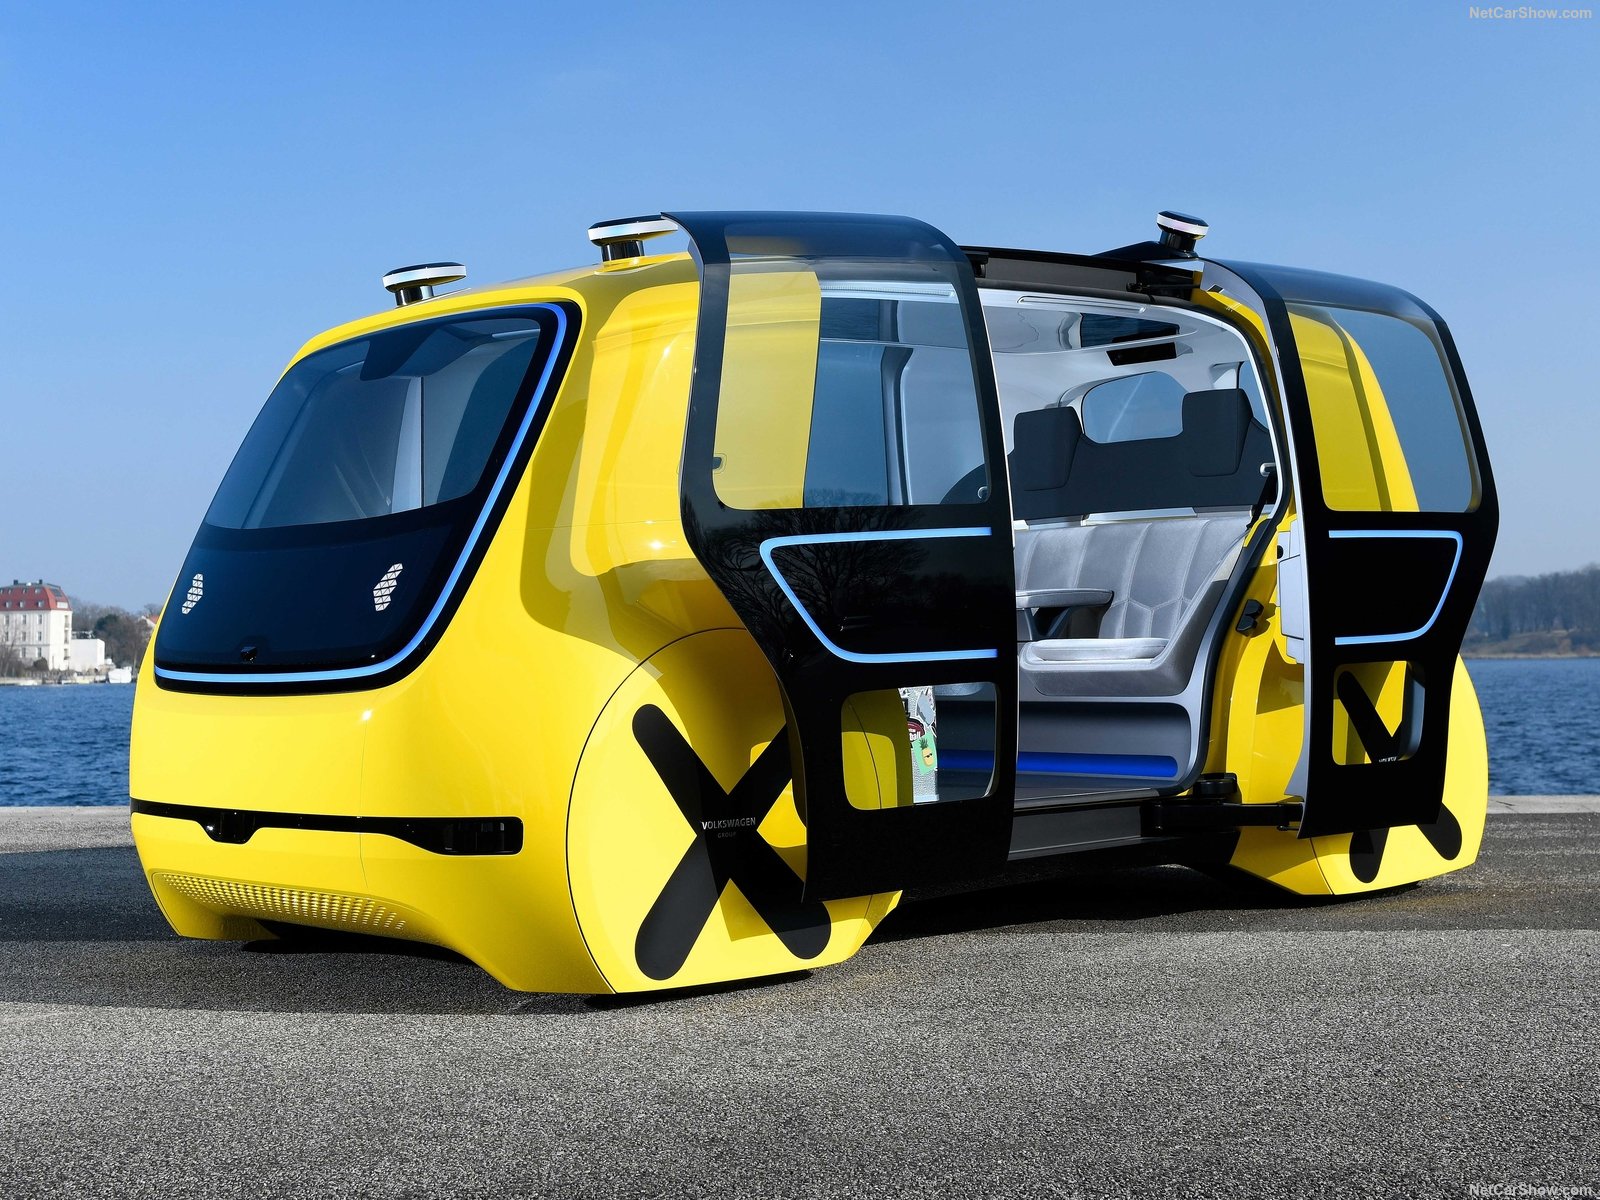 Transport 2018 Year Volkswagen Concept Car Vehicle 1600x1200